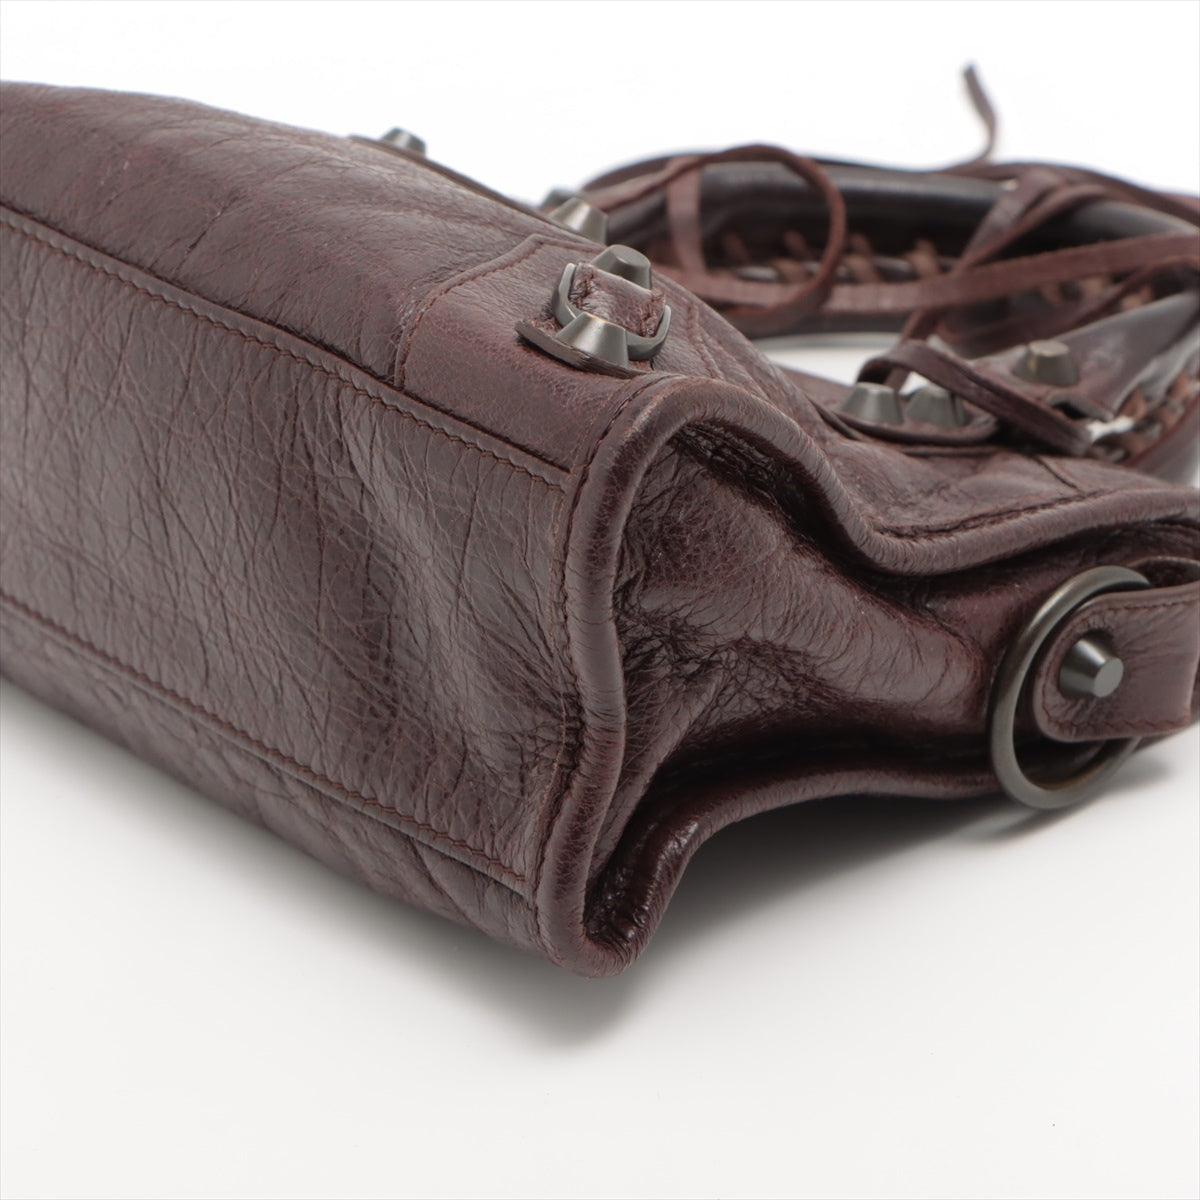 Balenciaga Classic Mini City Leather 2way handbag Brown 300295